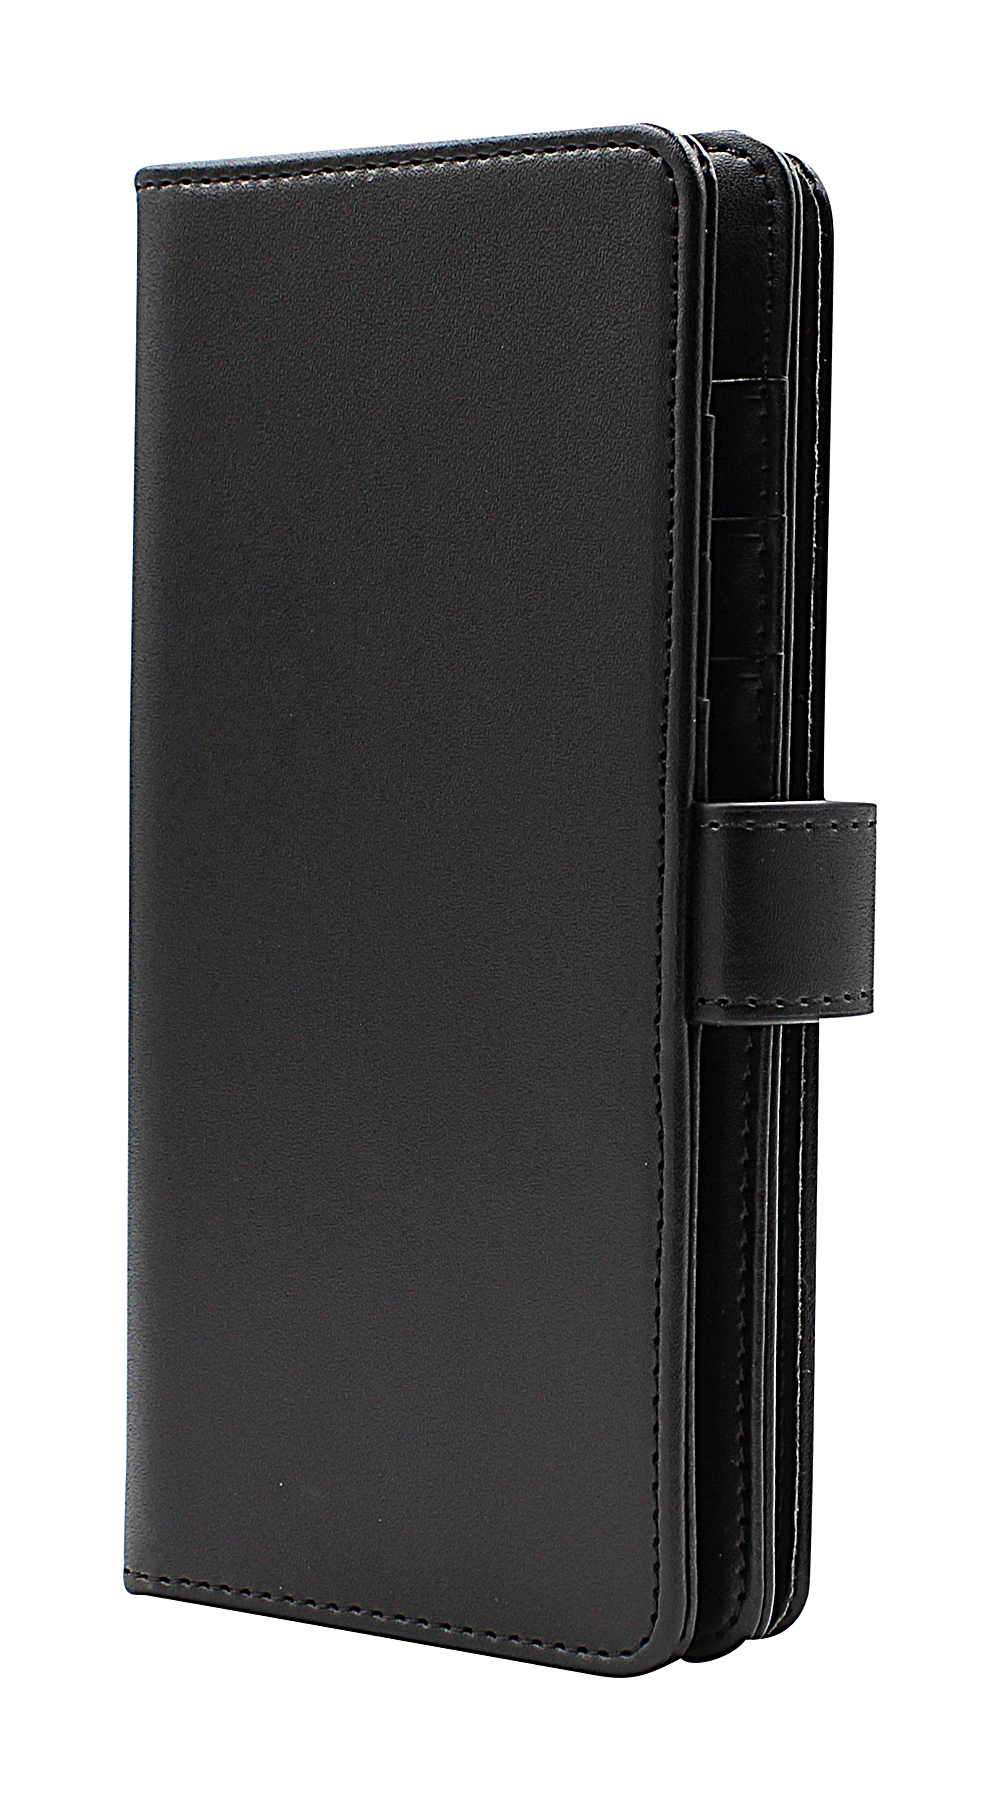 CoverInSkimblocker XL Wallet Xiaomi Mi 11 Lite / Mi 11 Lite 5G